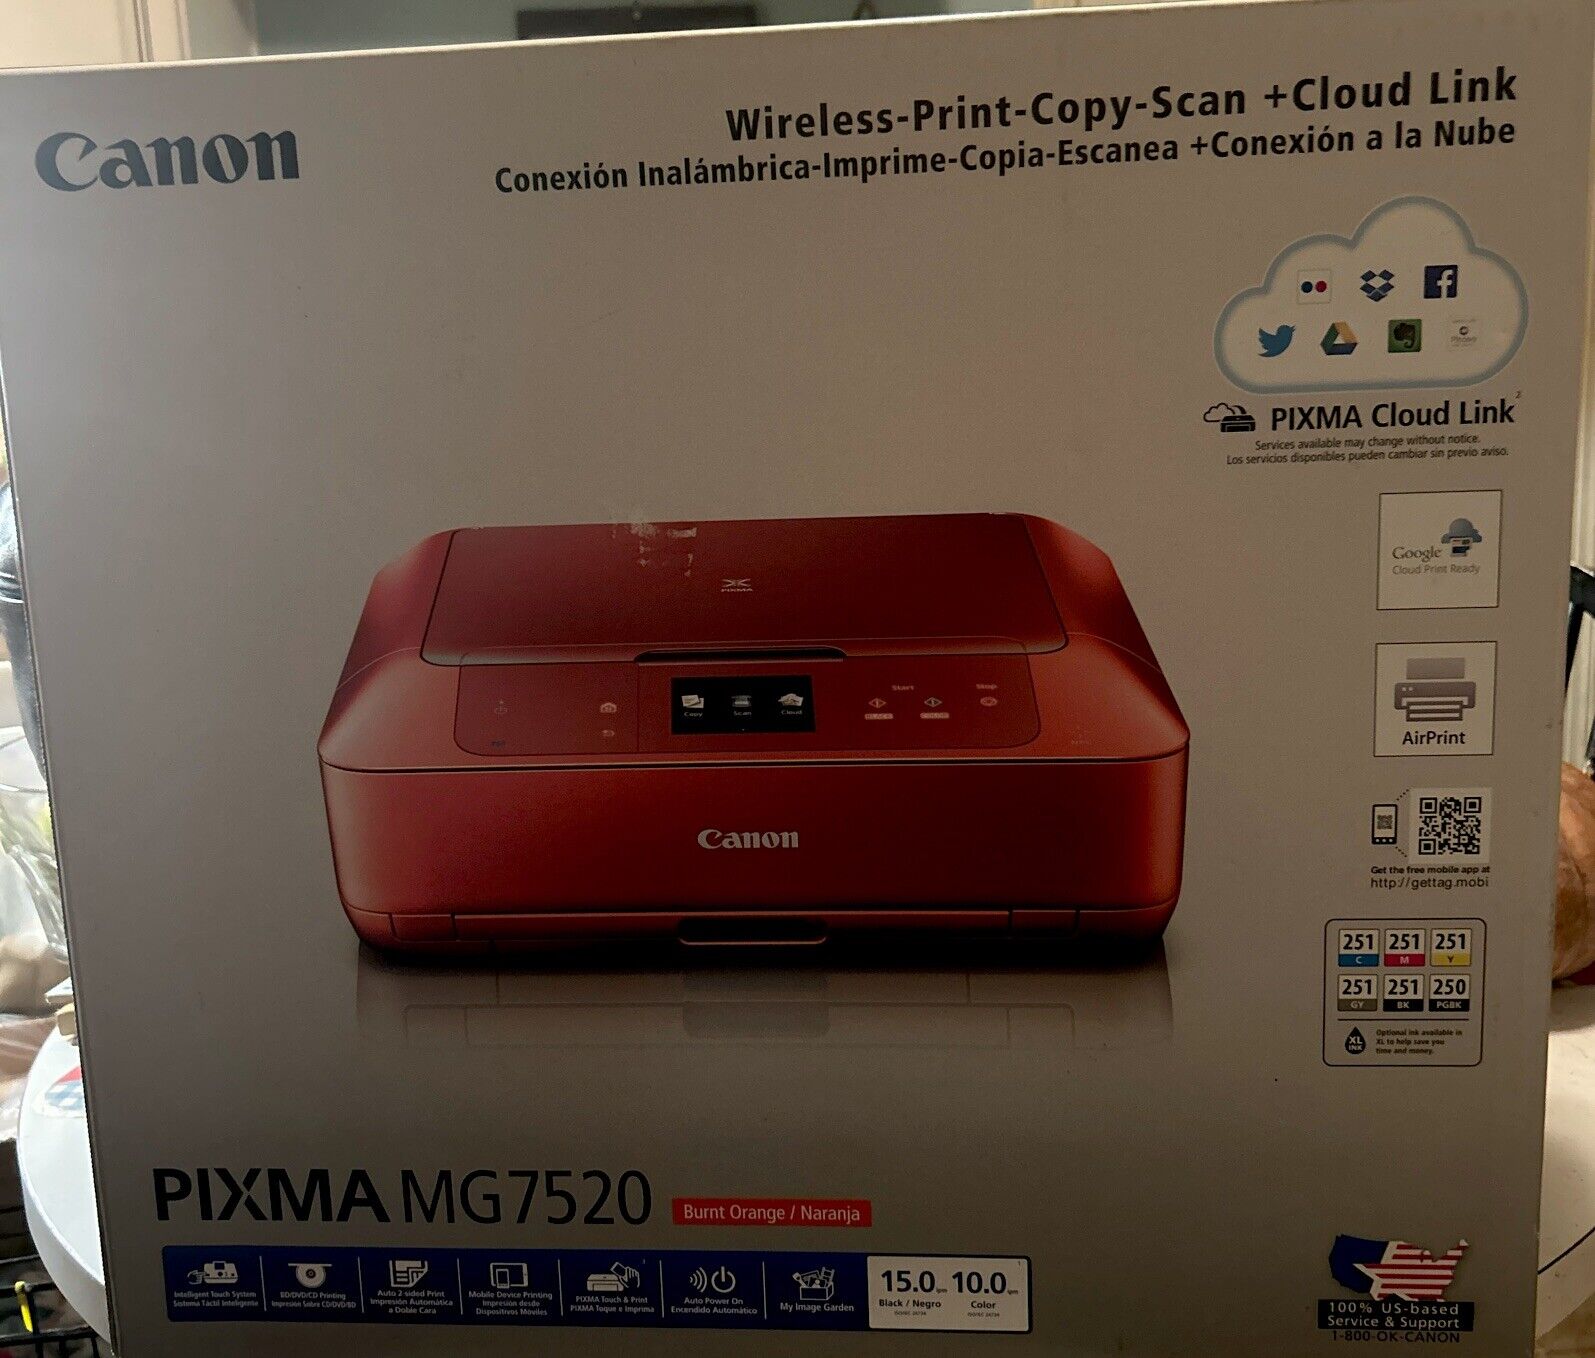 Canon Pixma MG7520 Wireless-Print-Copy-Scan+iCloud burnt Orange Sealed New